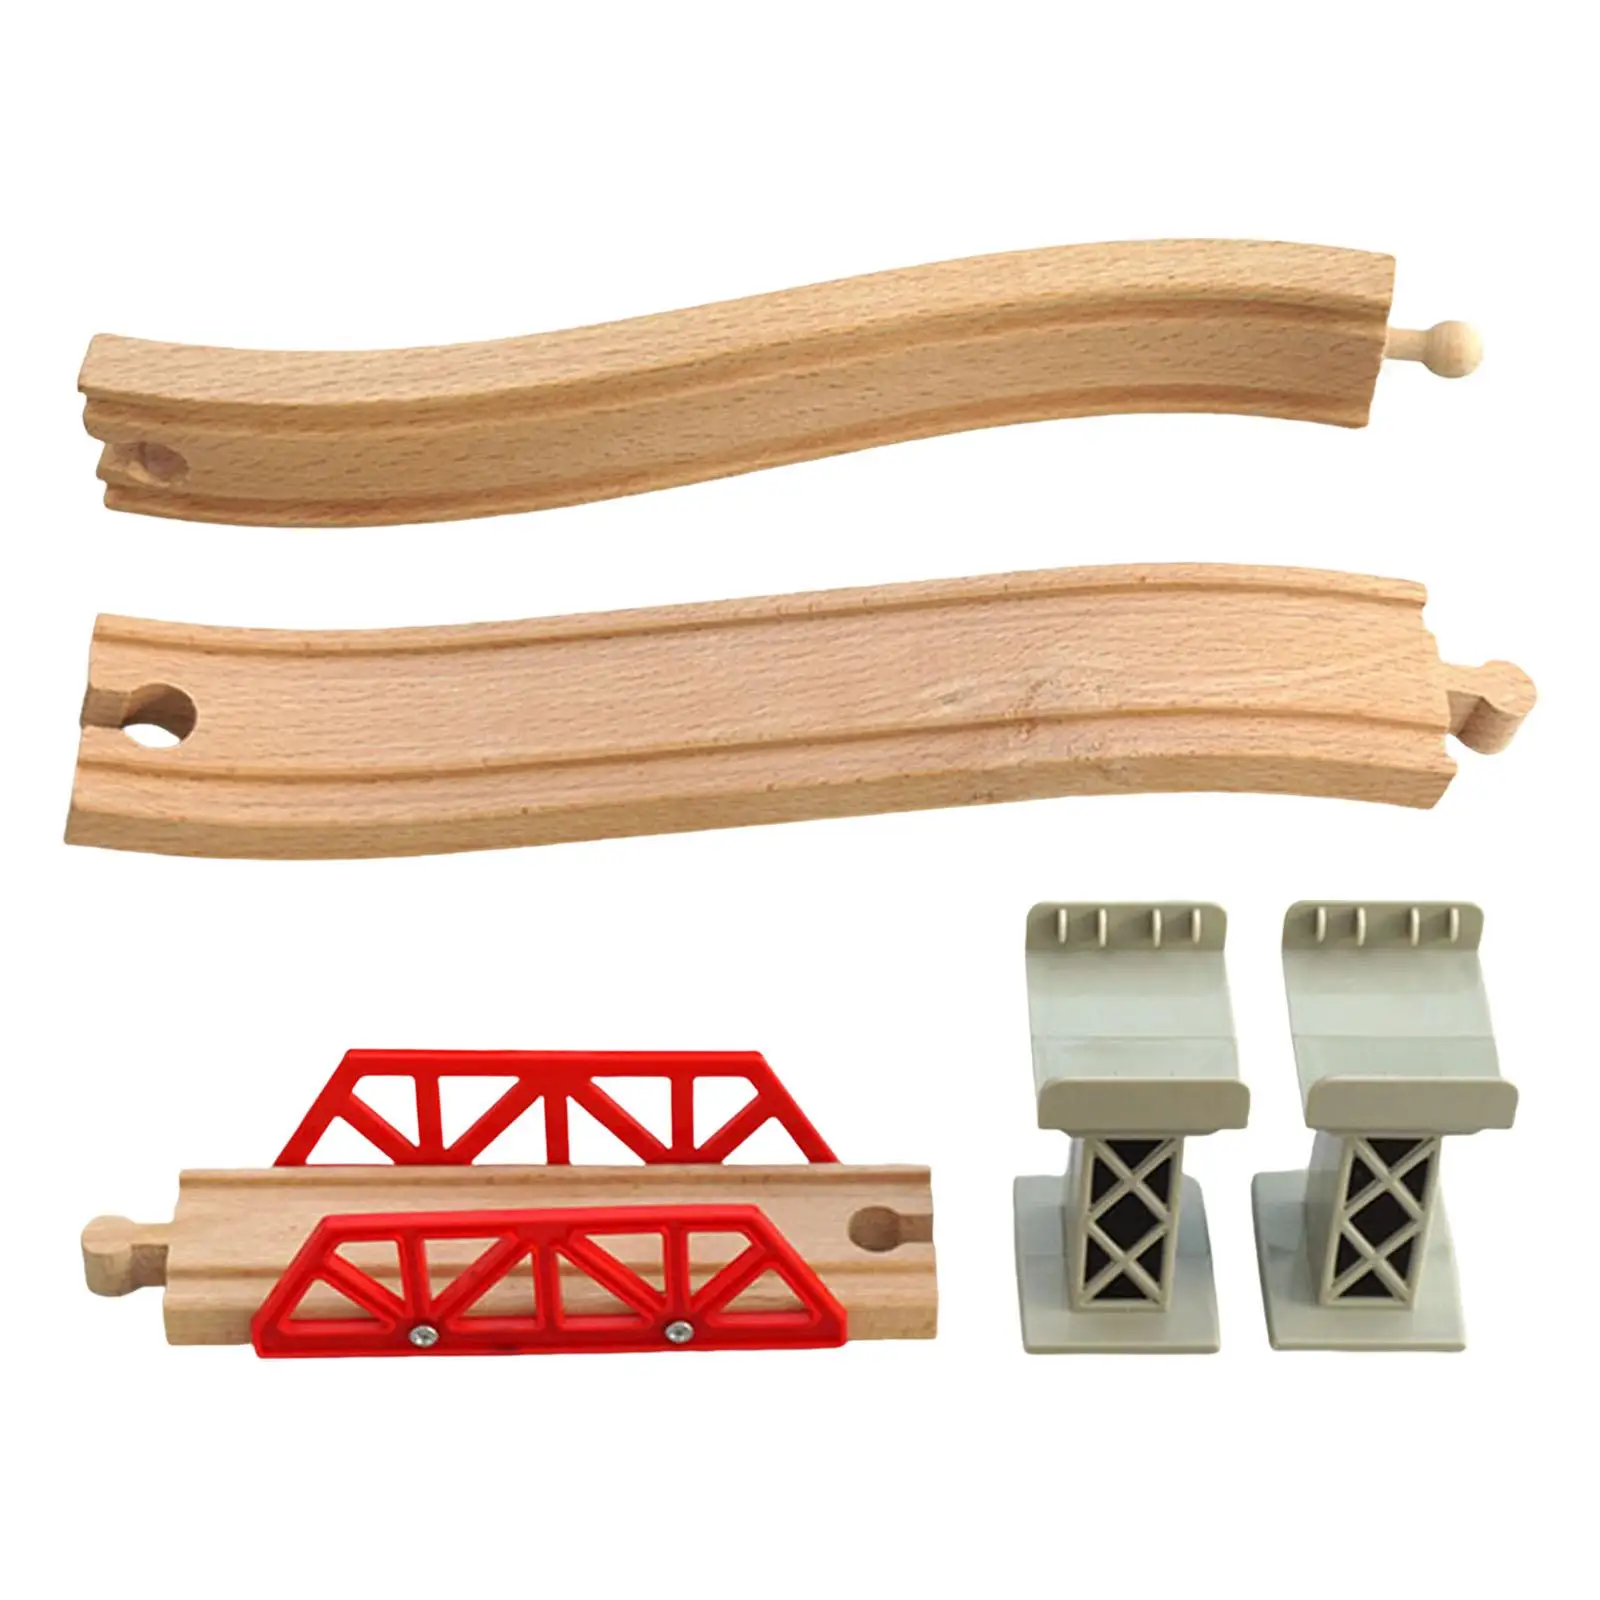 Wooden Railroads Train Toys Accessories Rail Bridge Classic Toy Train Tracks for Children